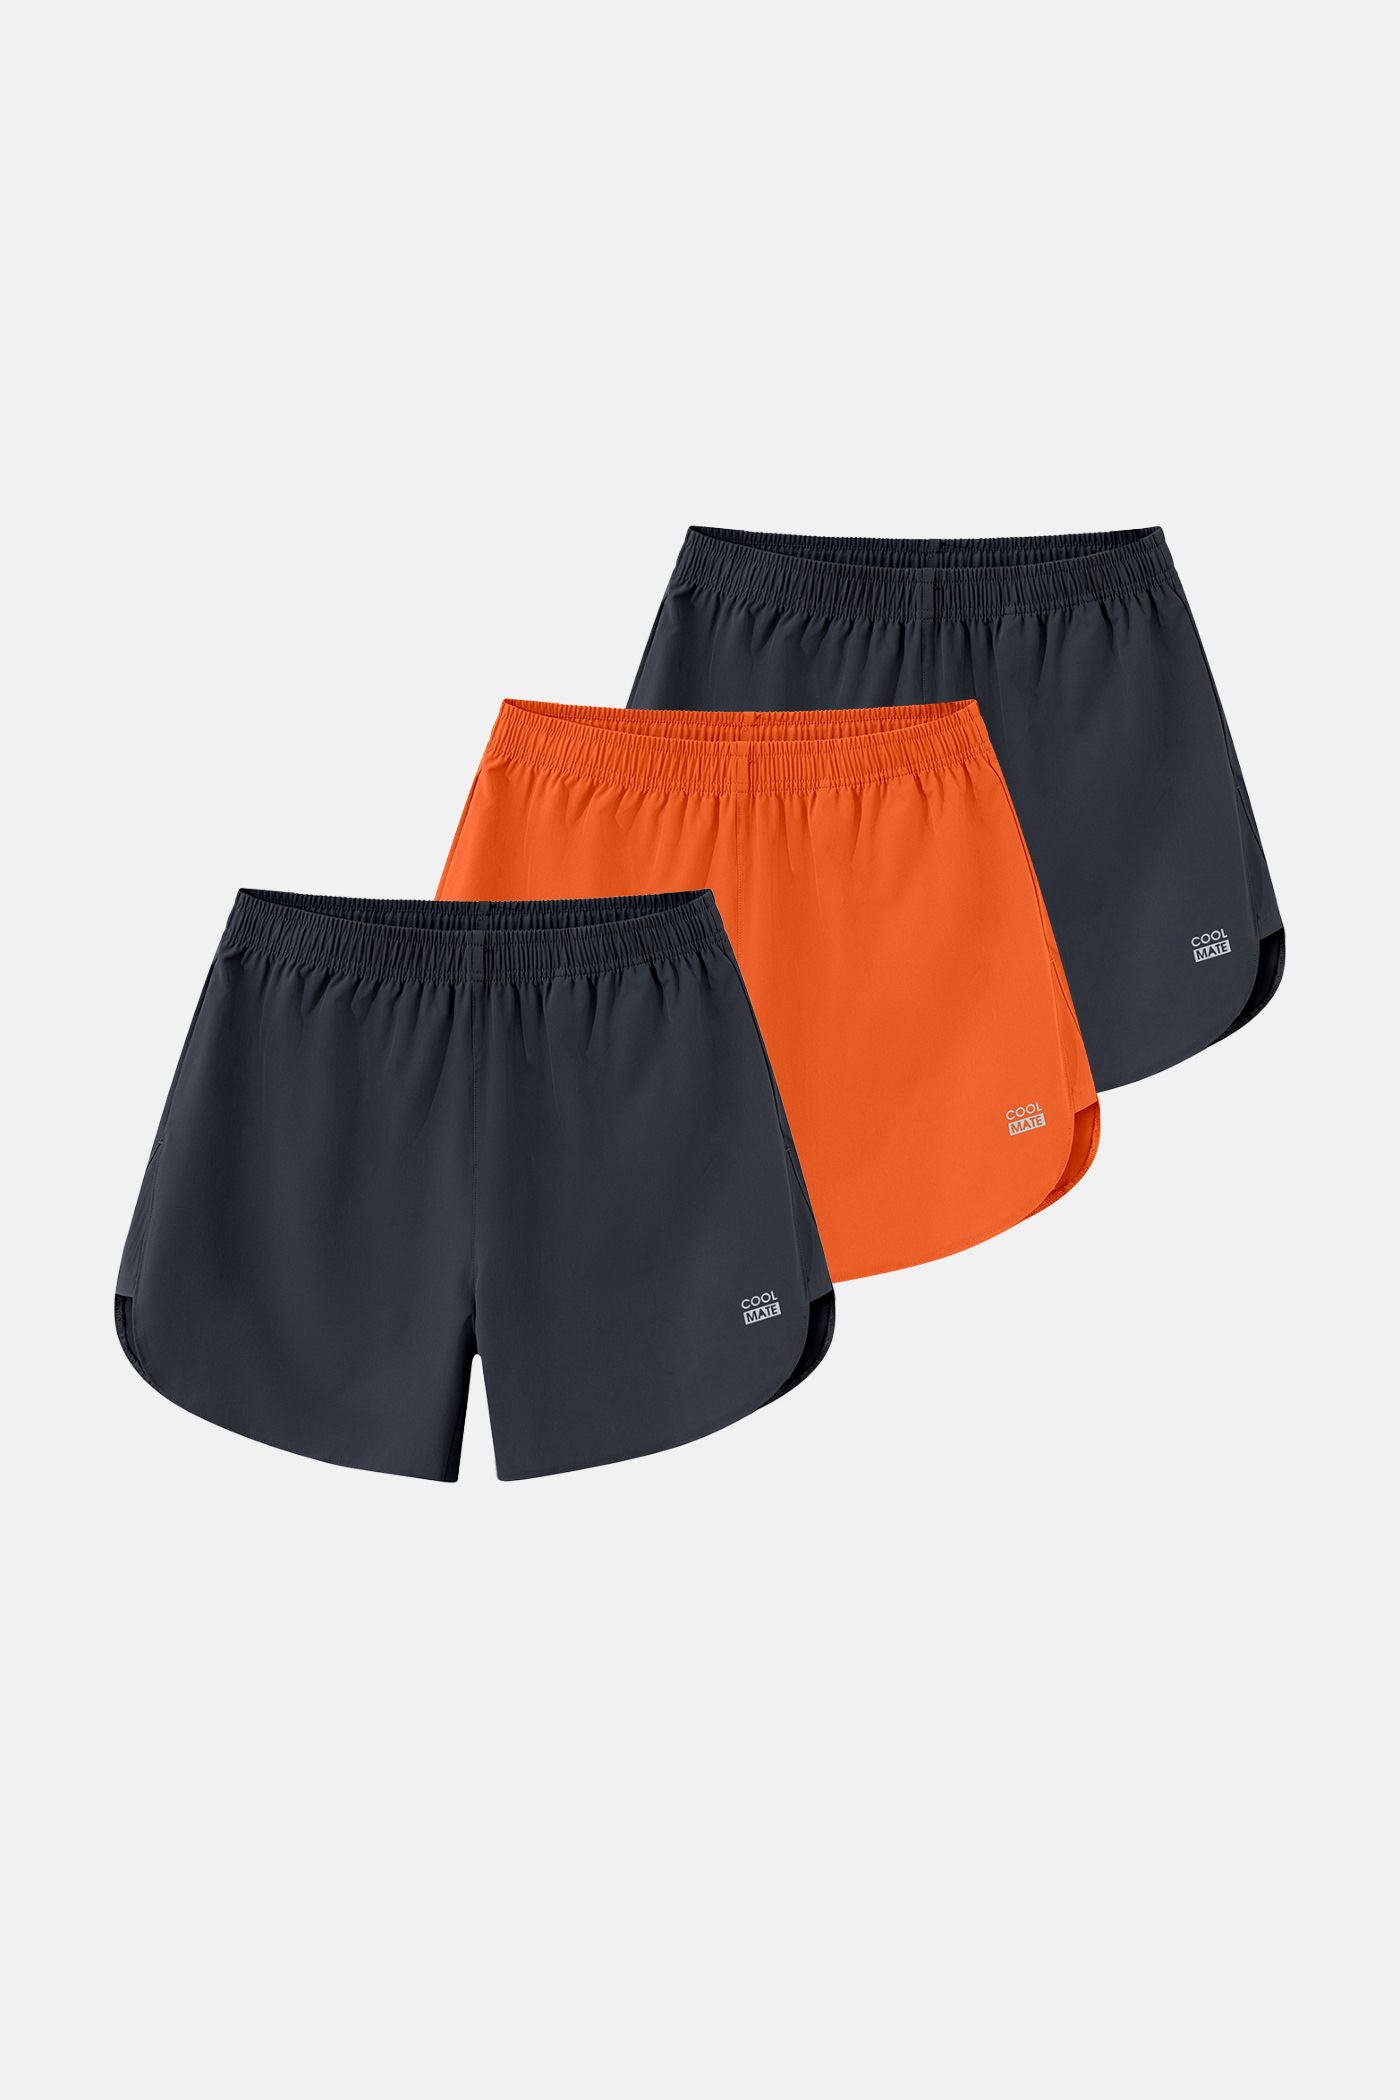 Combo 3 Shorts chạy bộ Basics 